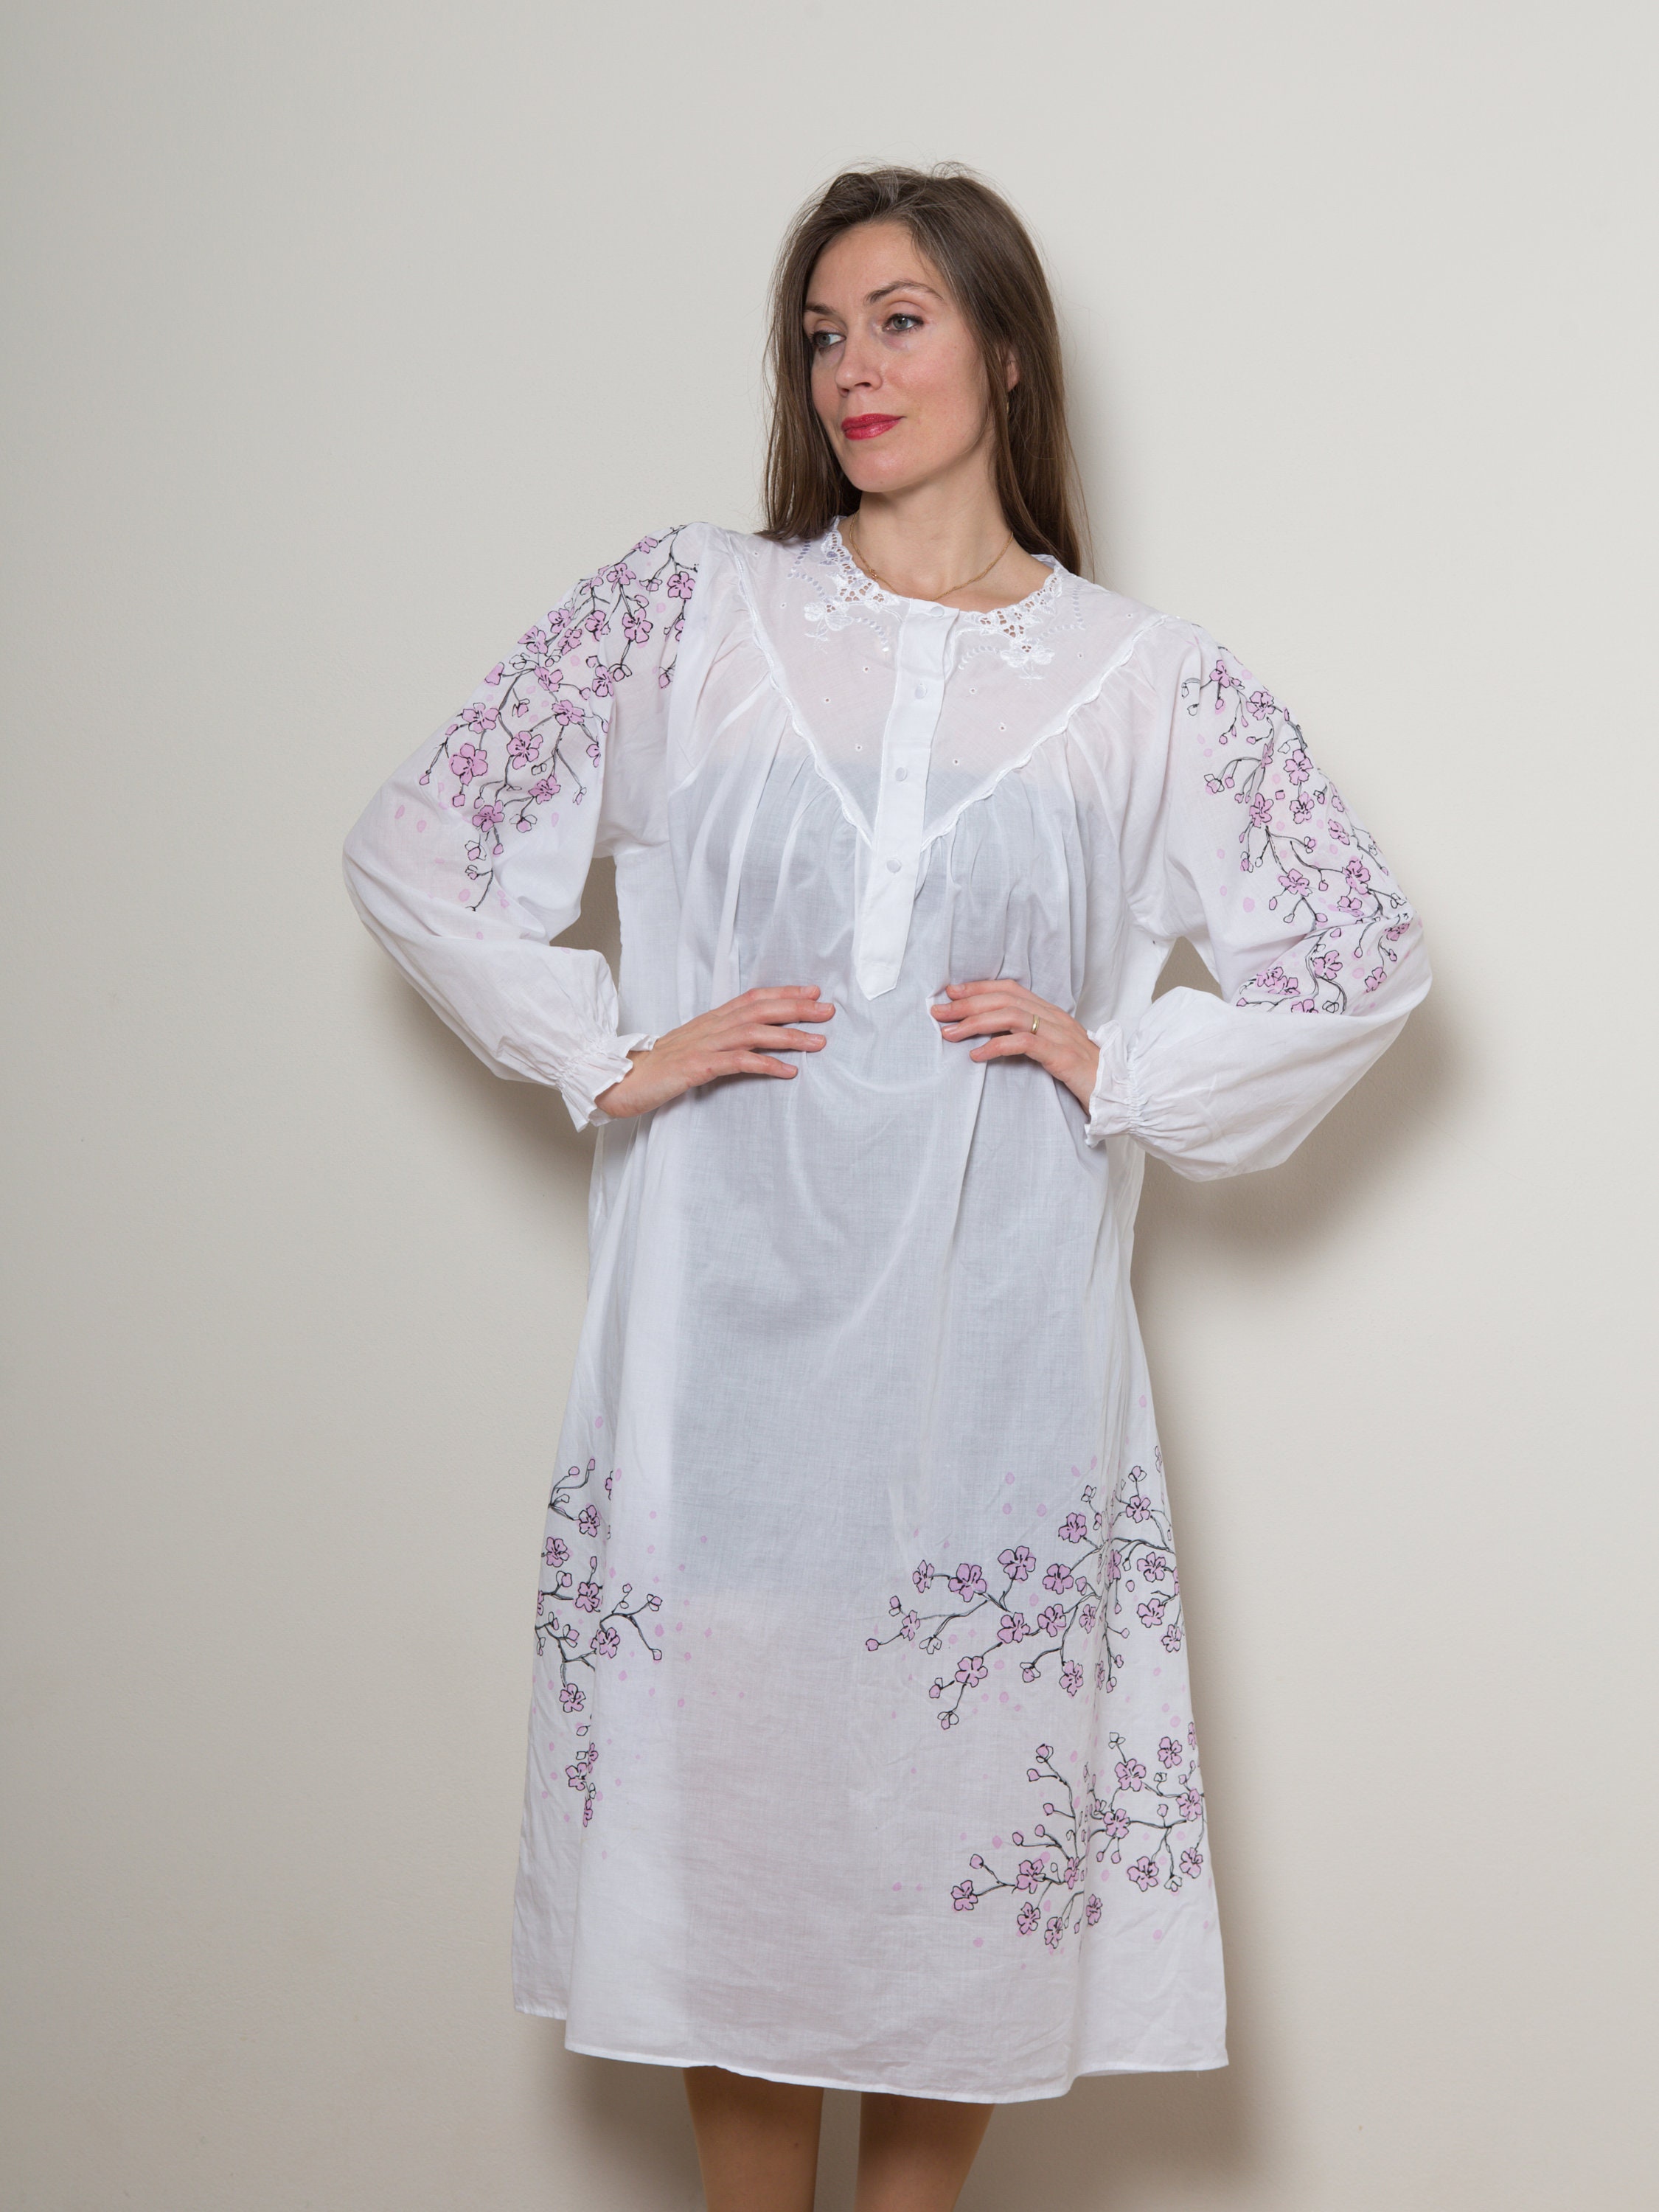 Sakura Nightgown White Cotton Nightdress Upcycled Hand Painted | Etsy